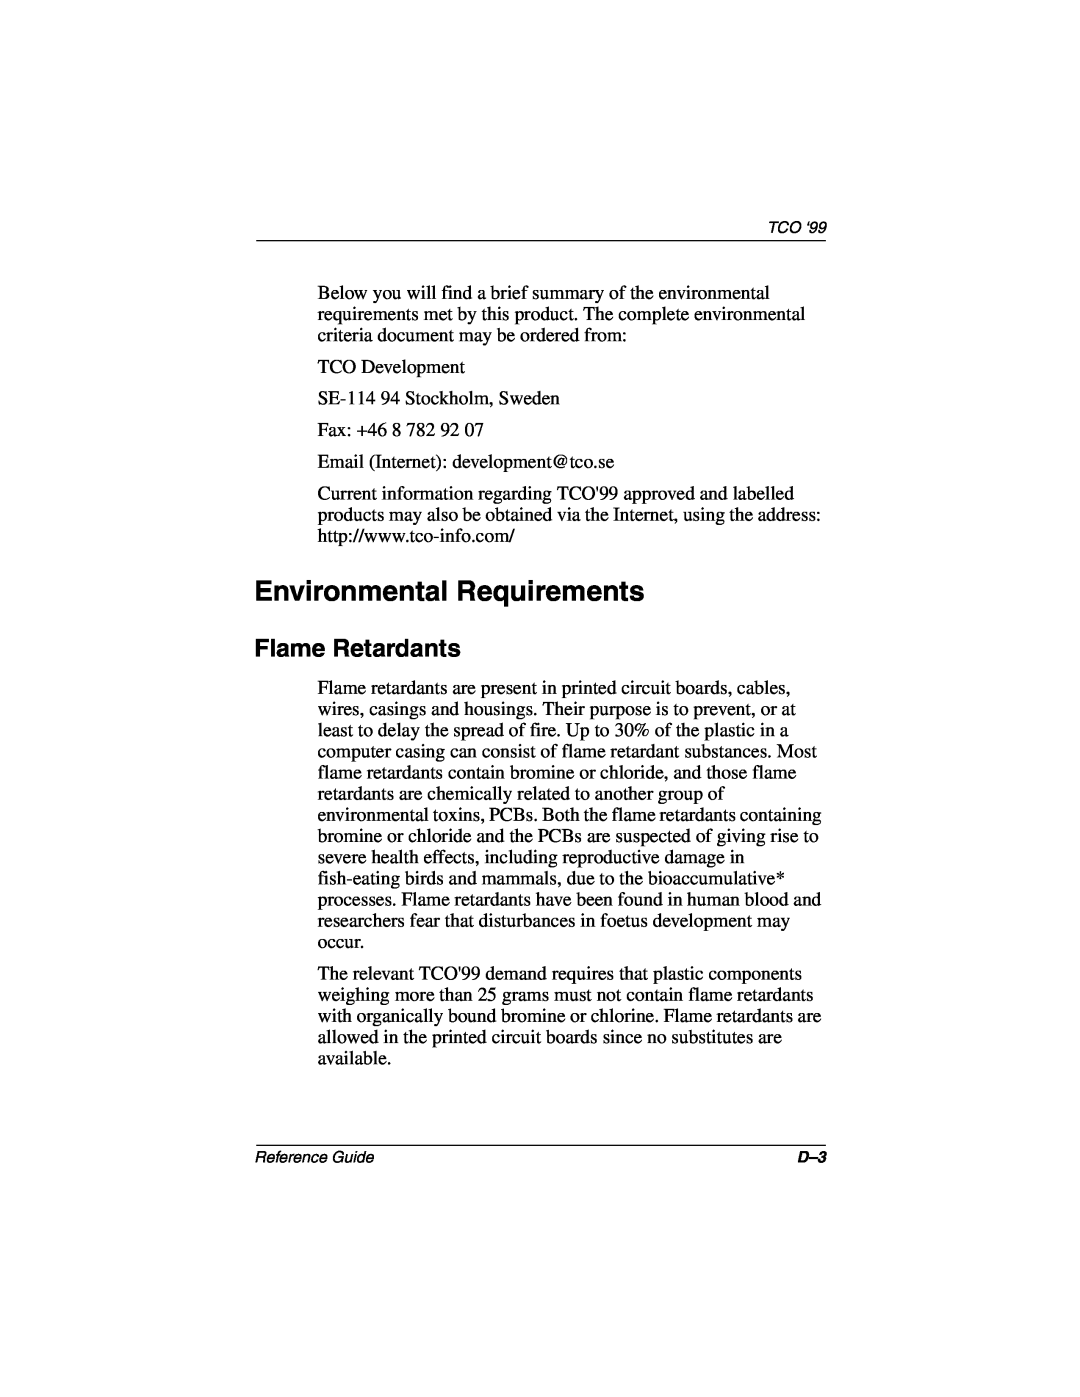 Compaq 5017 manual Environmental Requirements, Flame Retardants 